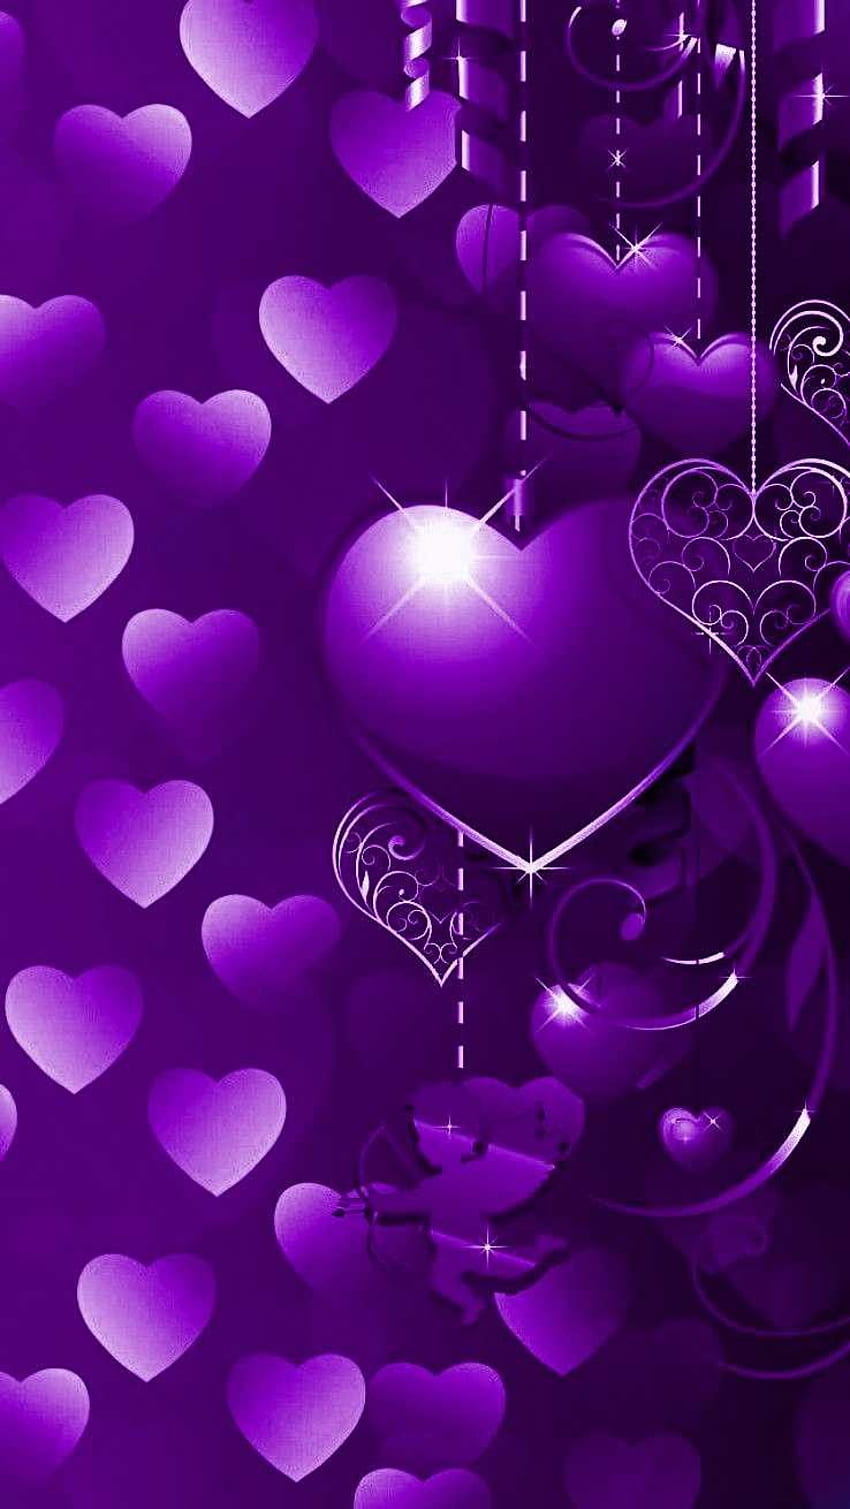 HD wallpaper Bright Light Heart purple and teal heart wallpaper Love  abstract  Wallpaper Flare